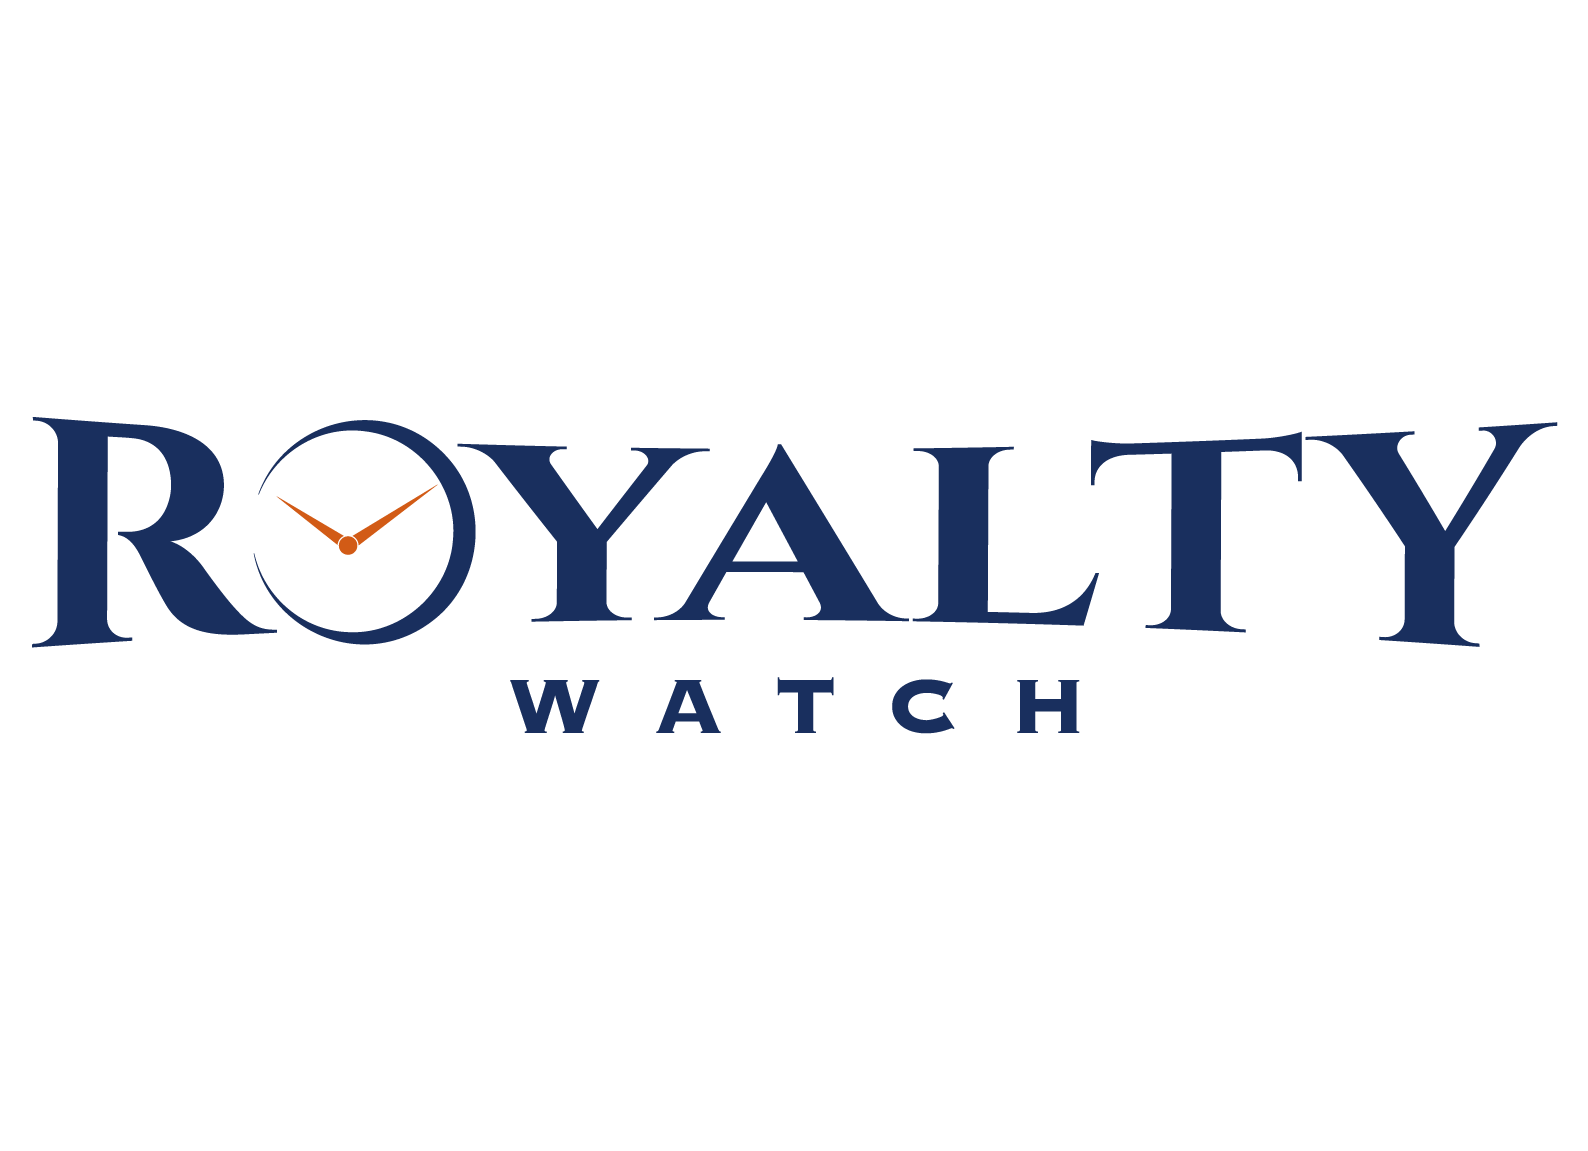 Royalty Watch